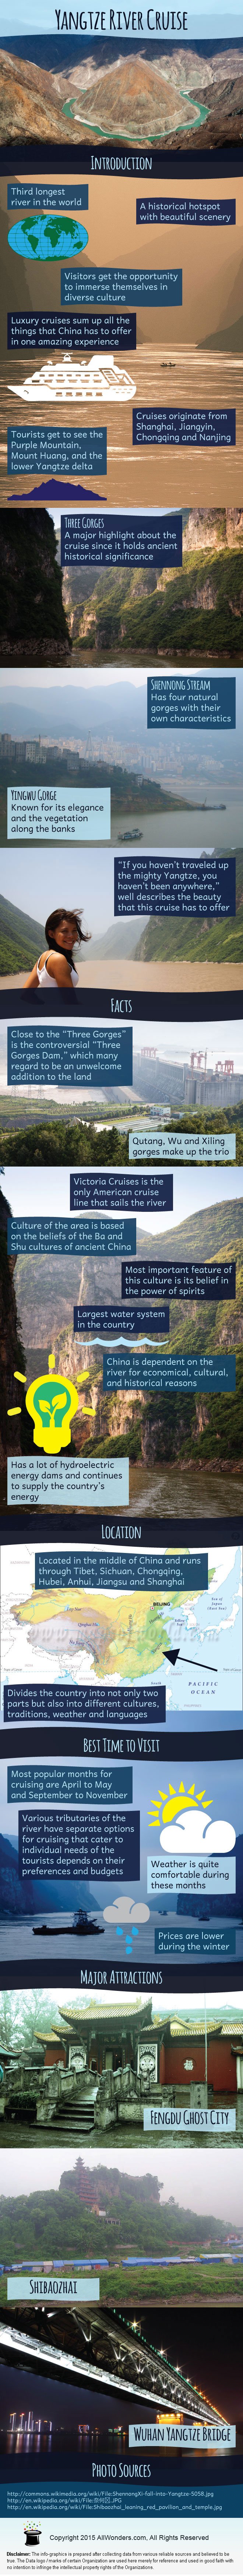 Yangtze River Cruise, China - Facts & Infographic